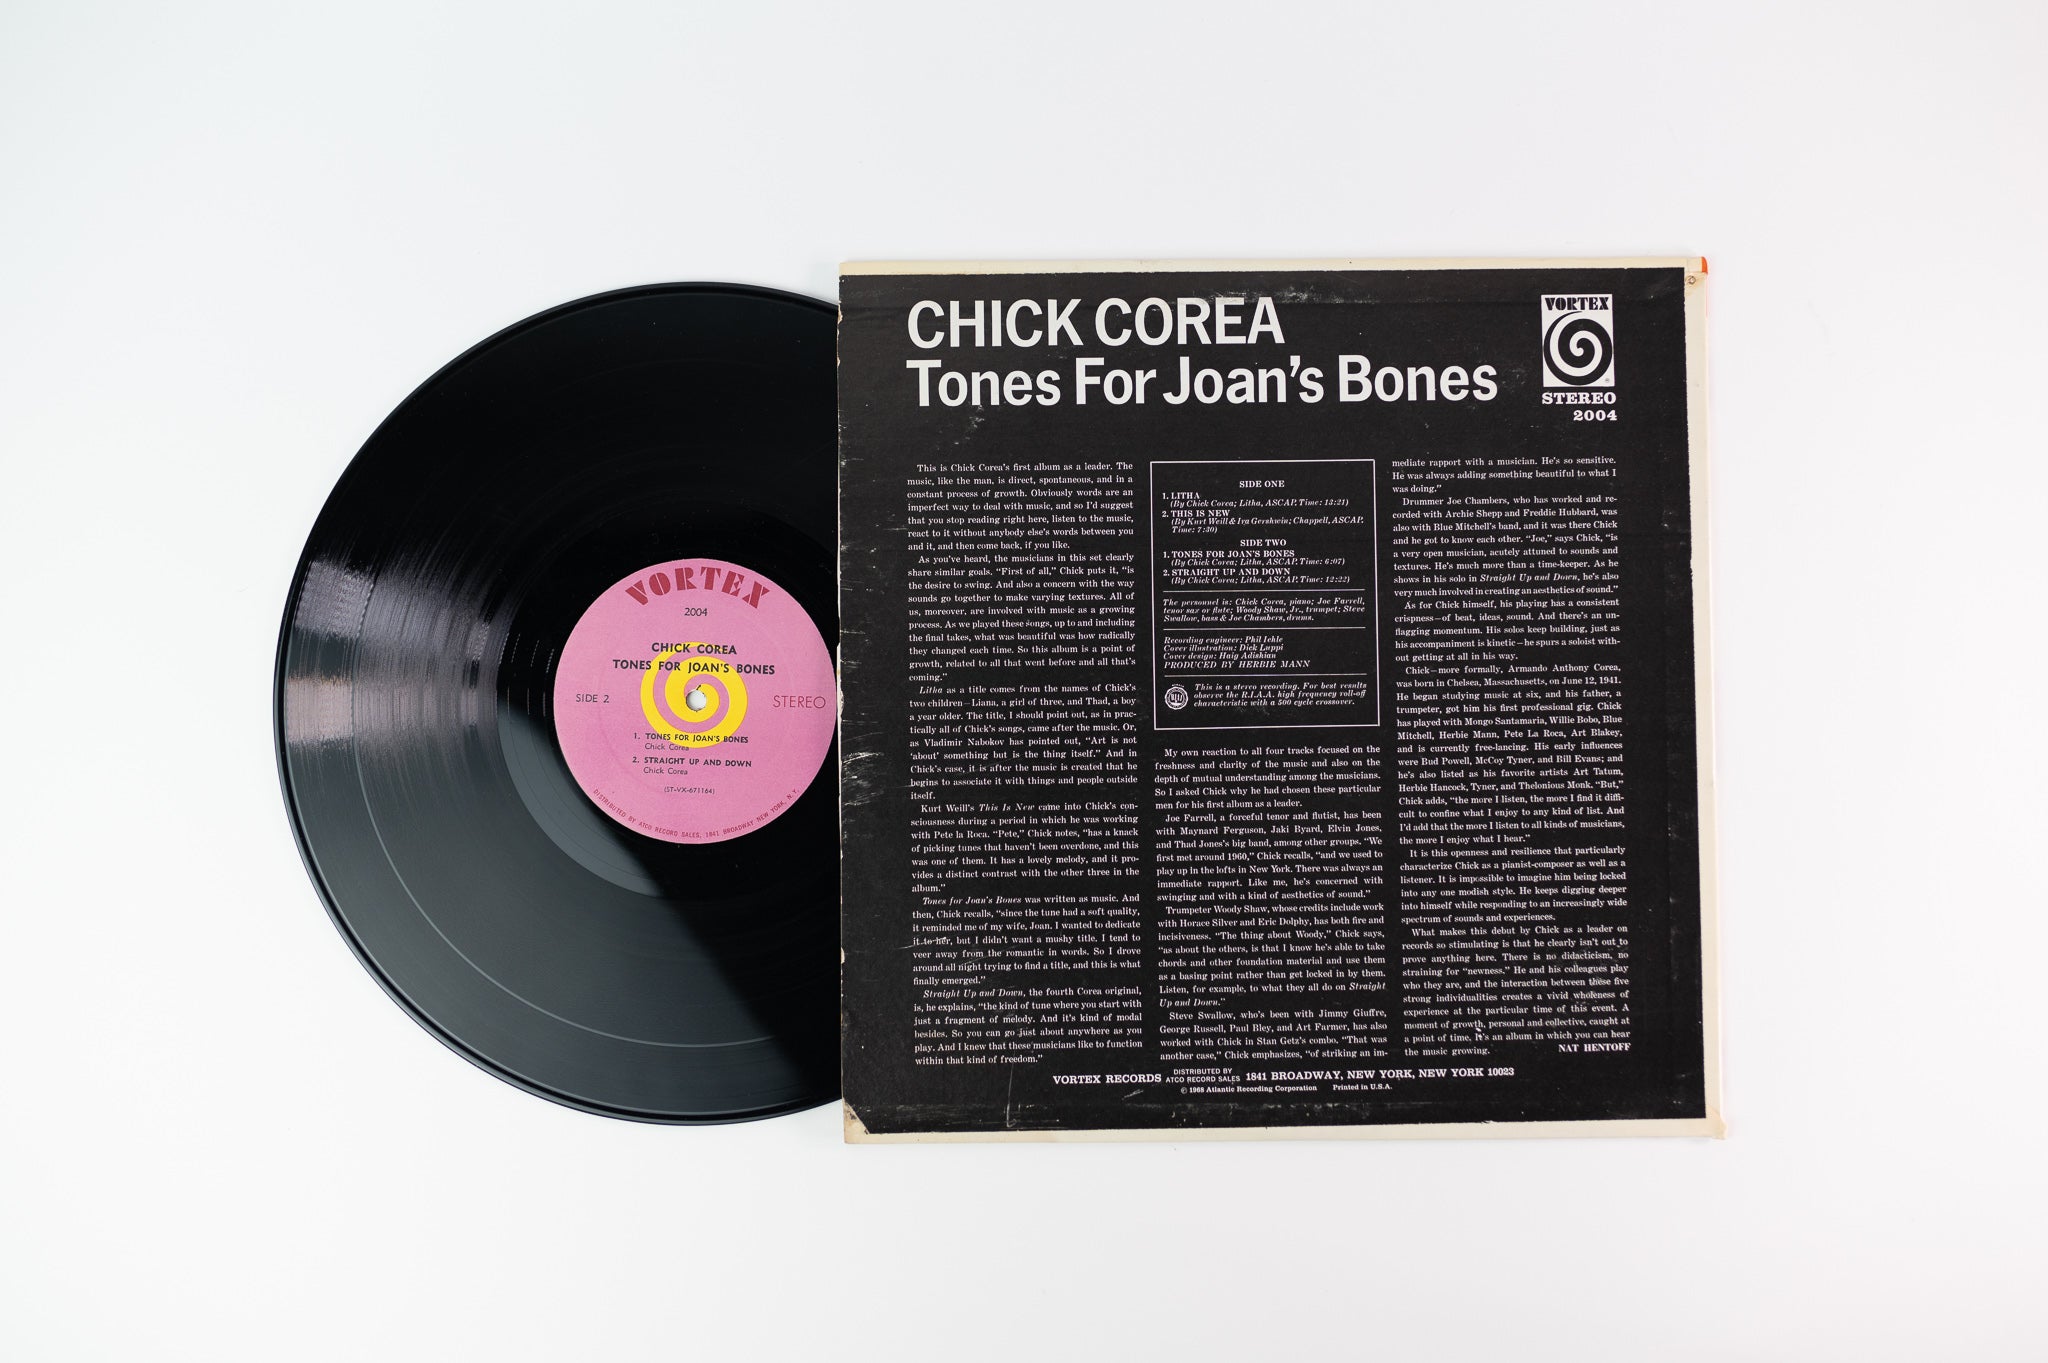 Chick Corea - Tones For Joan's Bones on Vortex